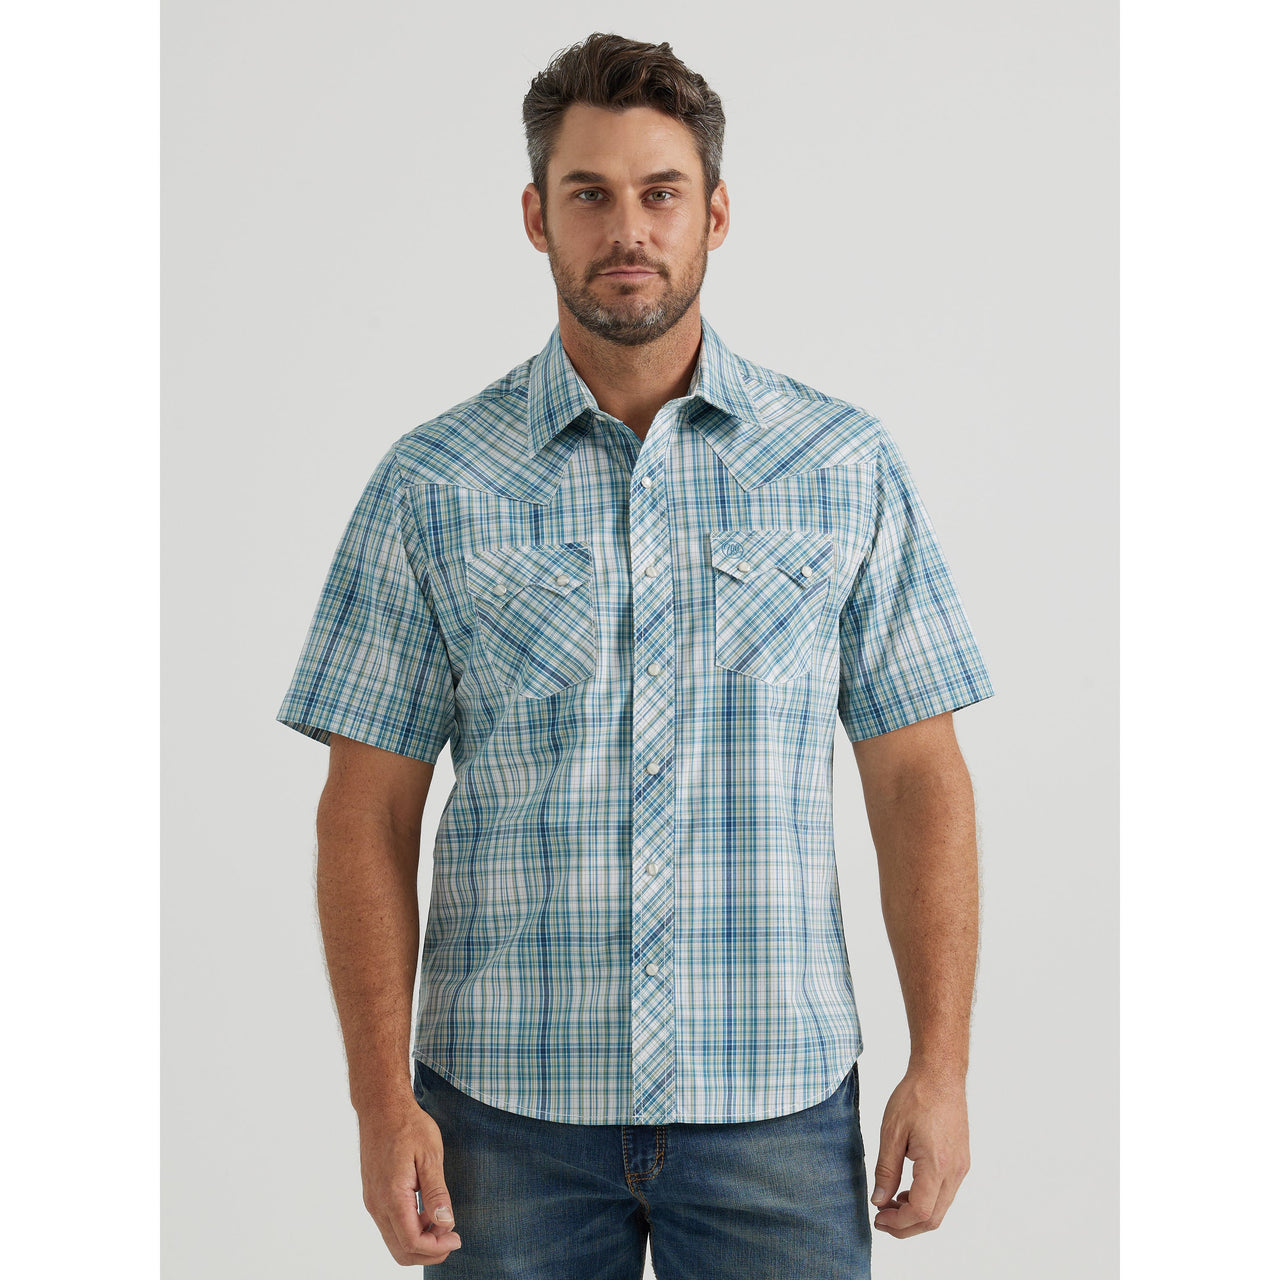 Wrangler Men's Retro Core Short Sleeve Plaid Shirt - Blue